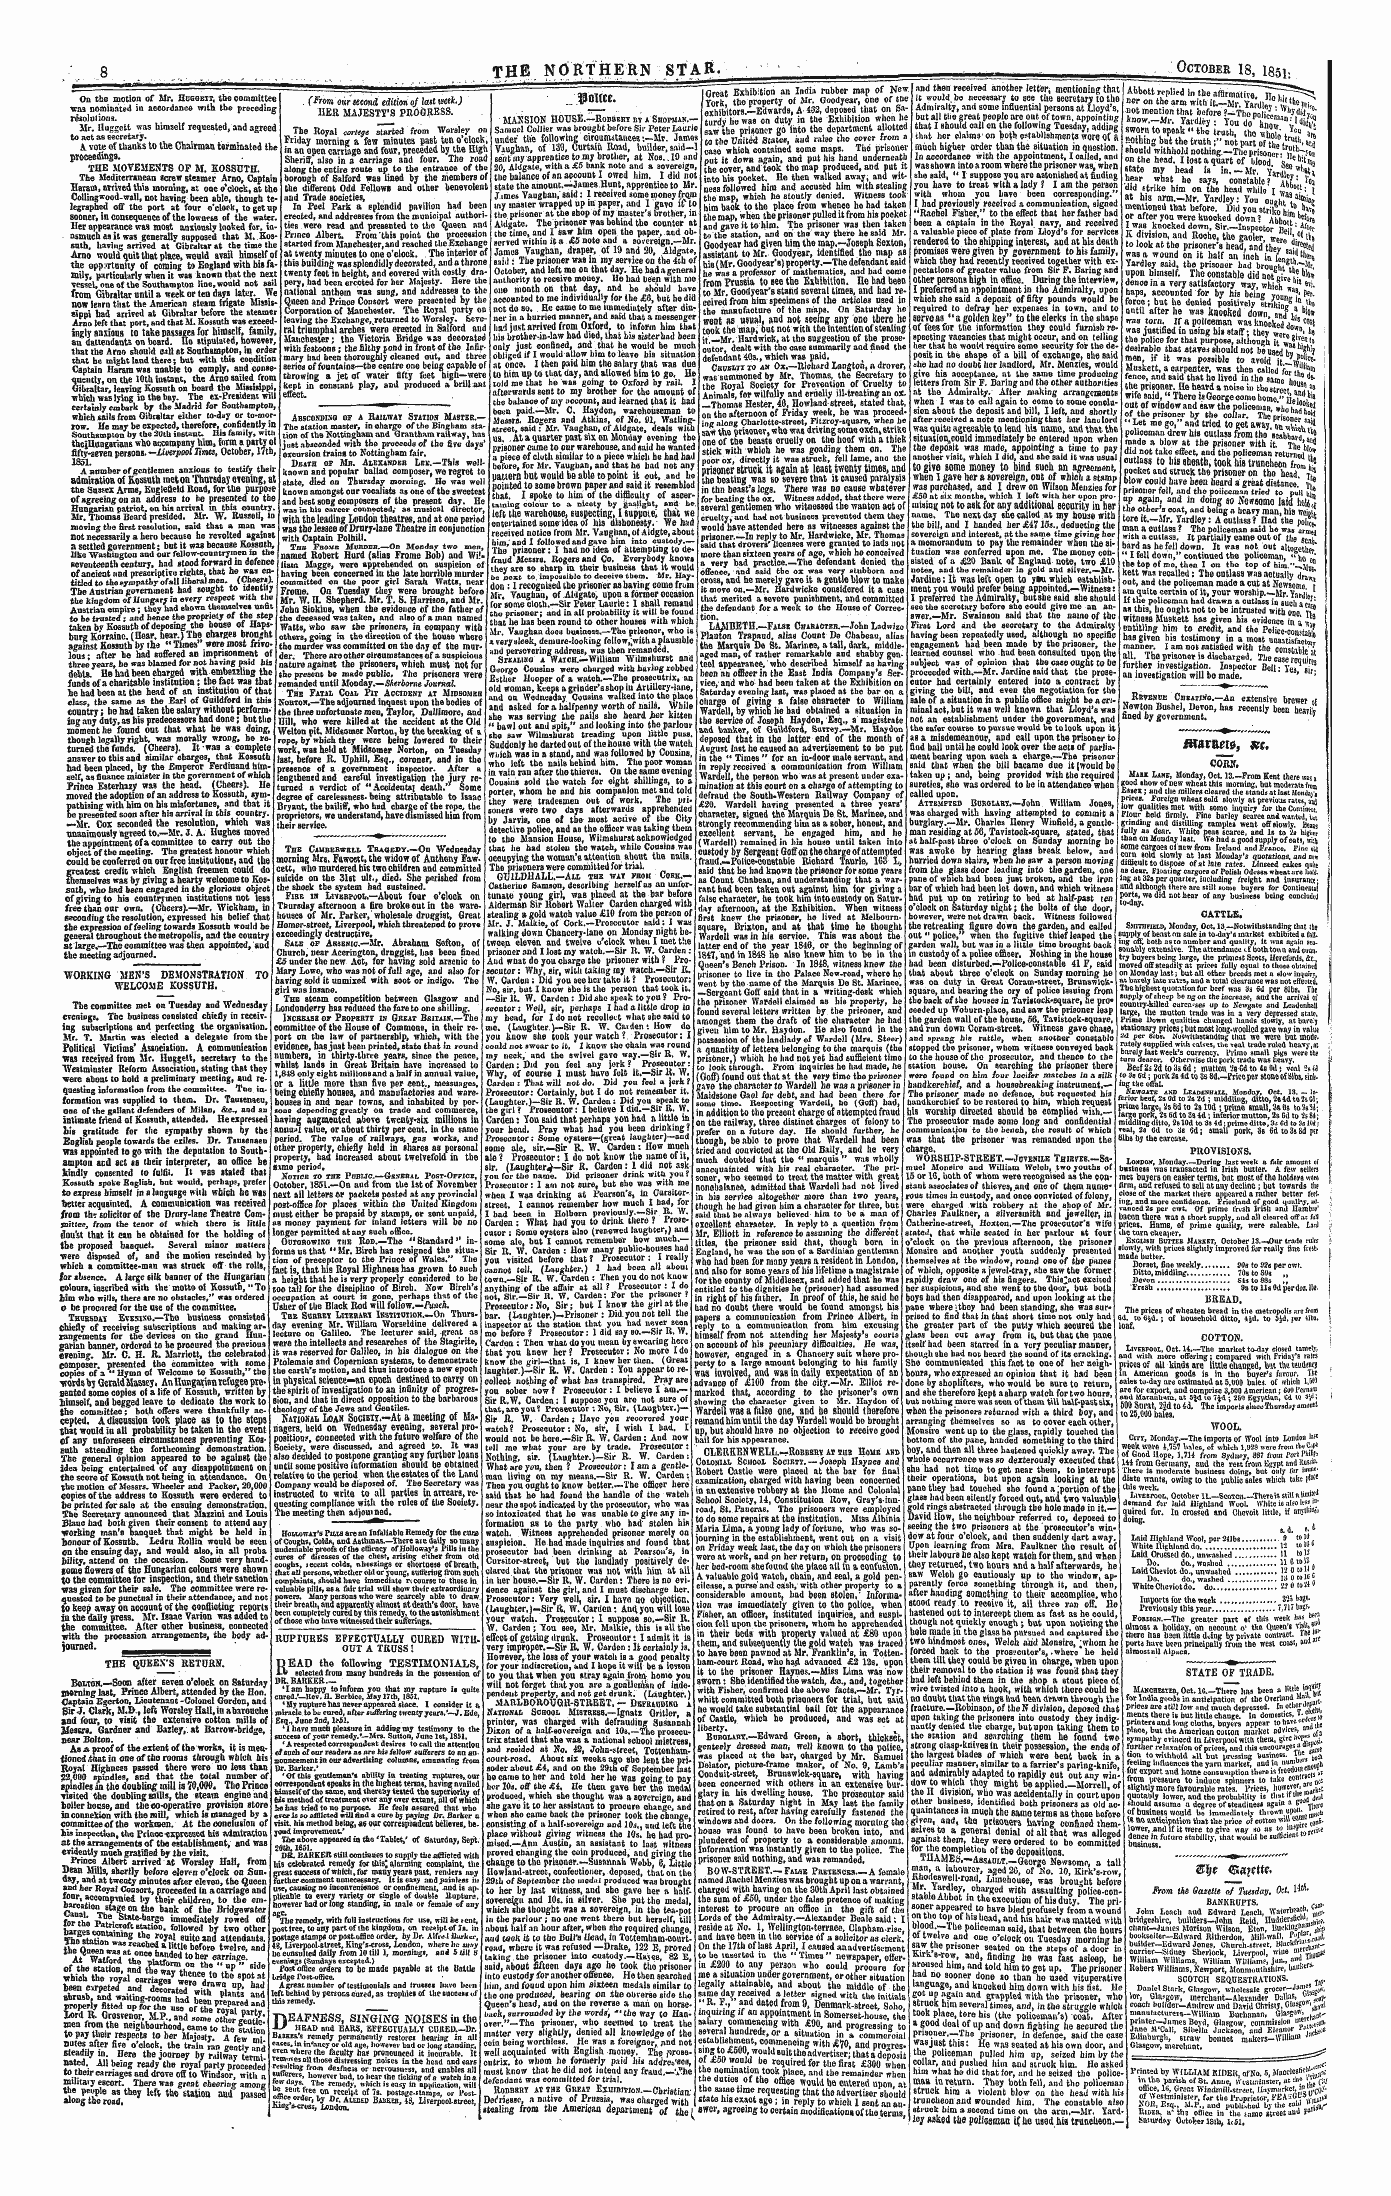 Northern Star (1837-1852): jS F Y, 1st edition - Polic E*